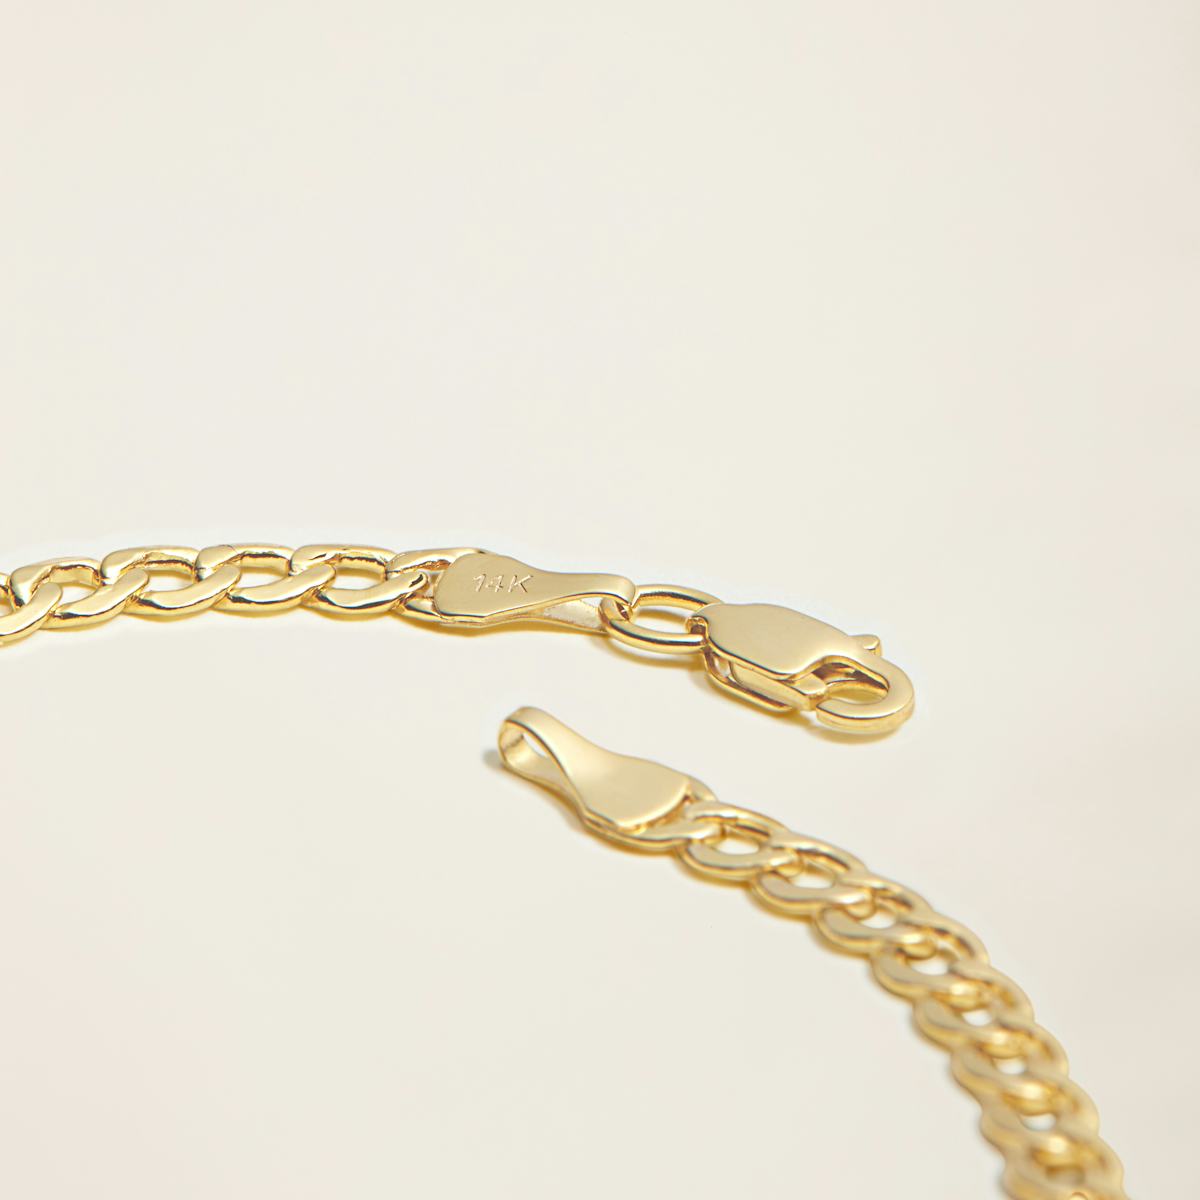 14K Gold Curb Chain Bracelet - 7.5__A_6698_Edited_Edited.jpg